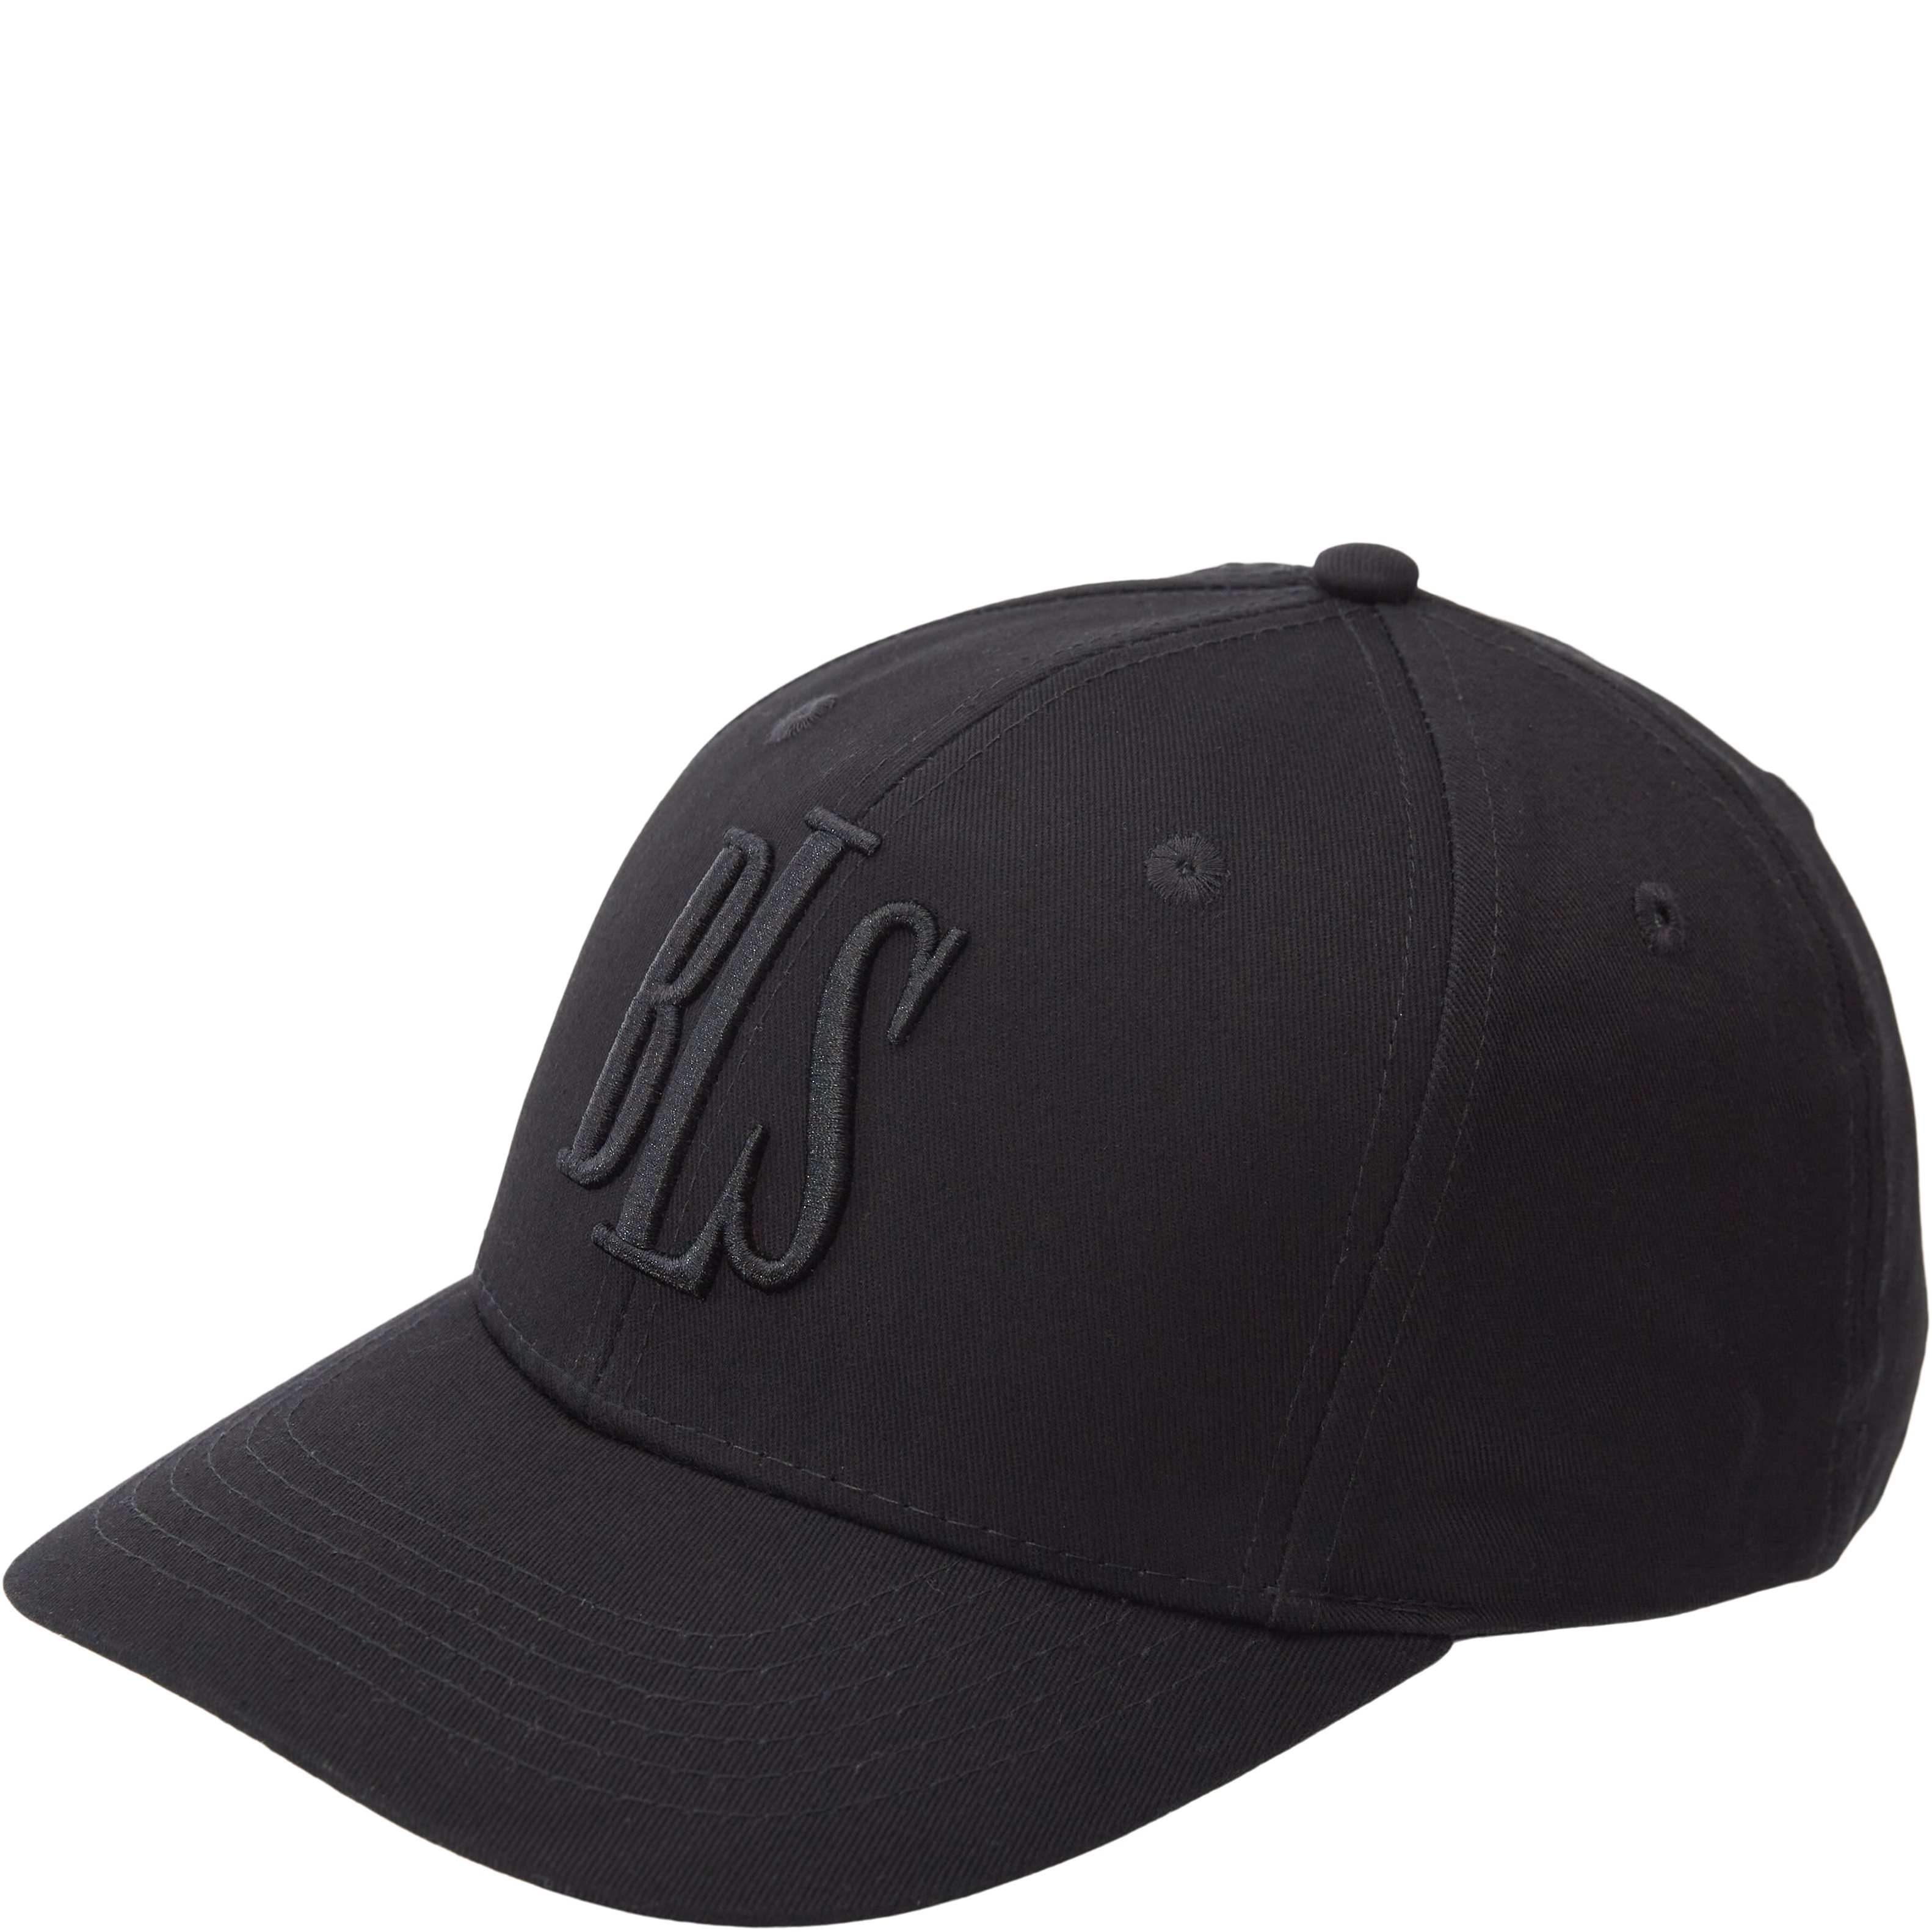 Classic baseball cap tonal black - Huer - Regular fit - Sort